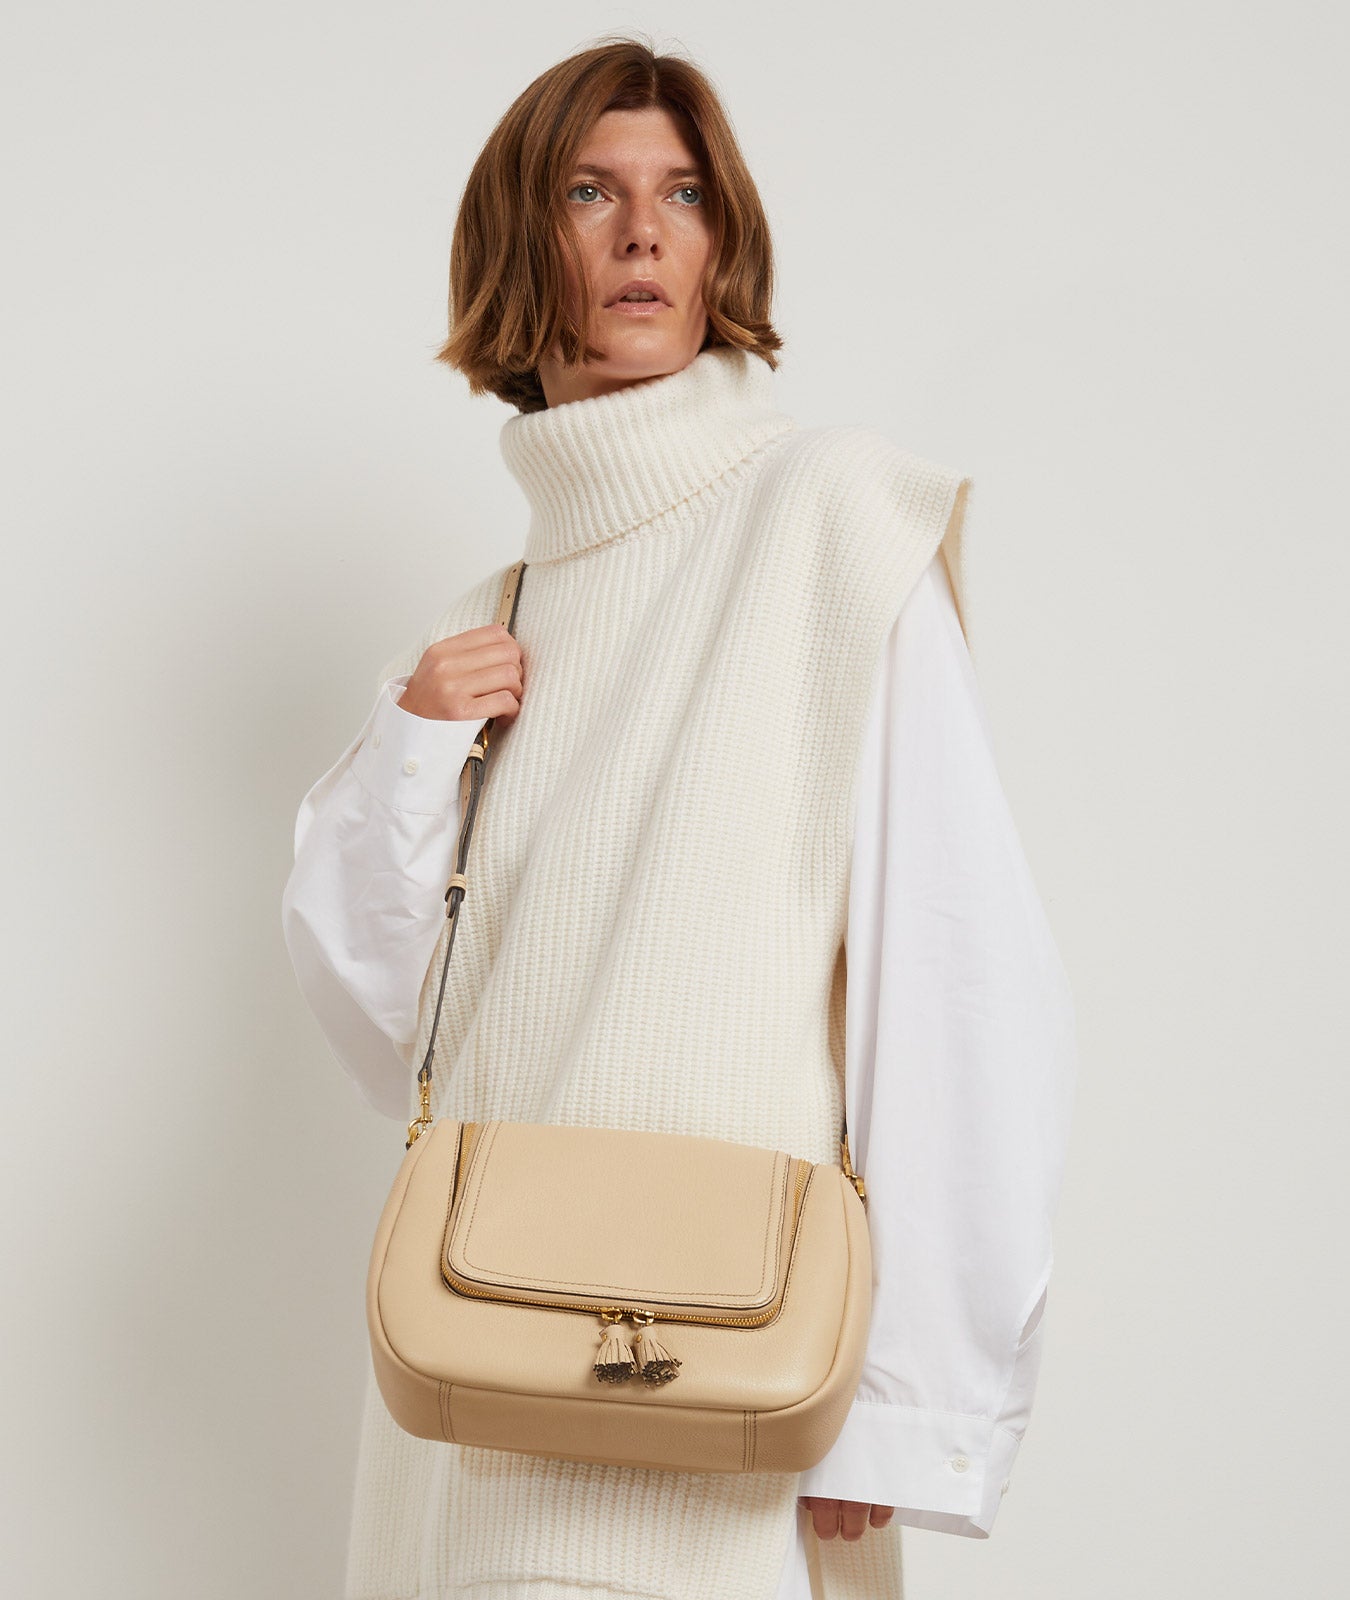 Anya Hindmarch | Luxury Designer Bags & Accessories | US & Anya ...